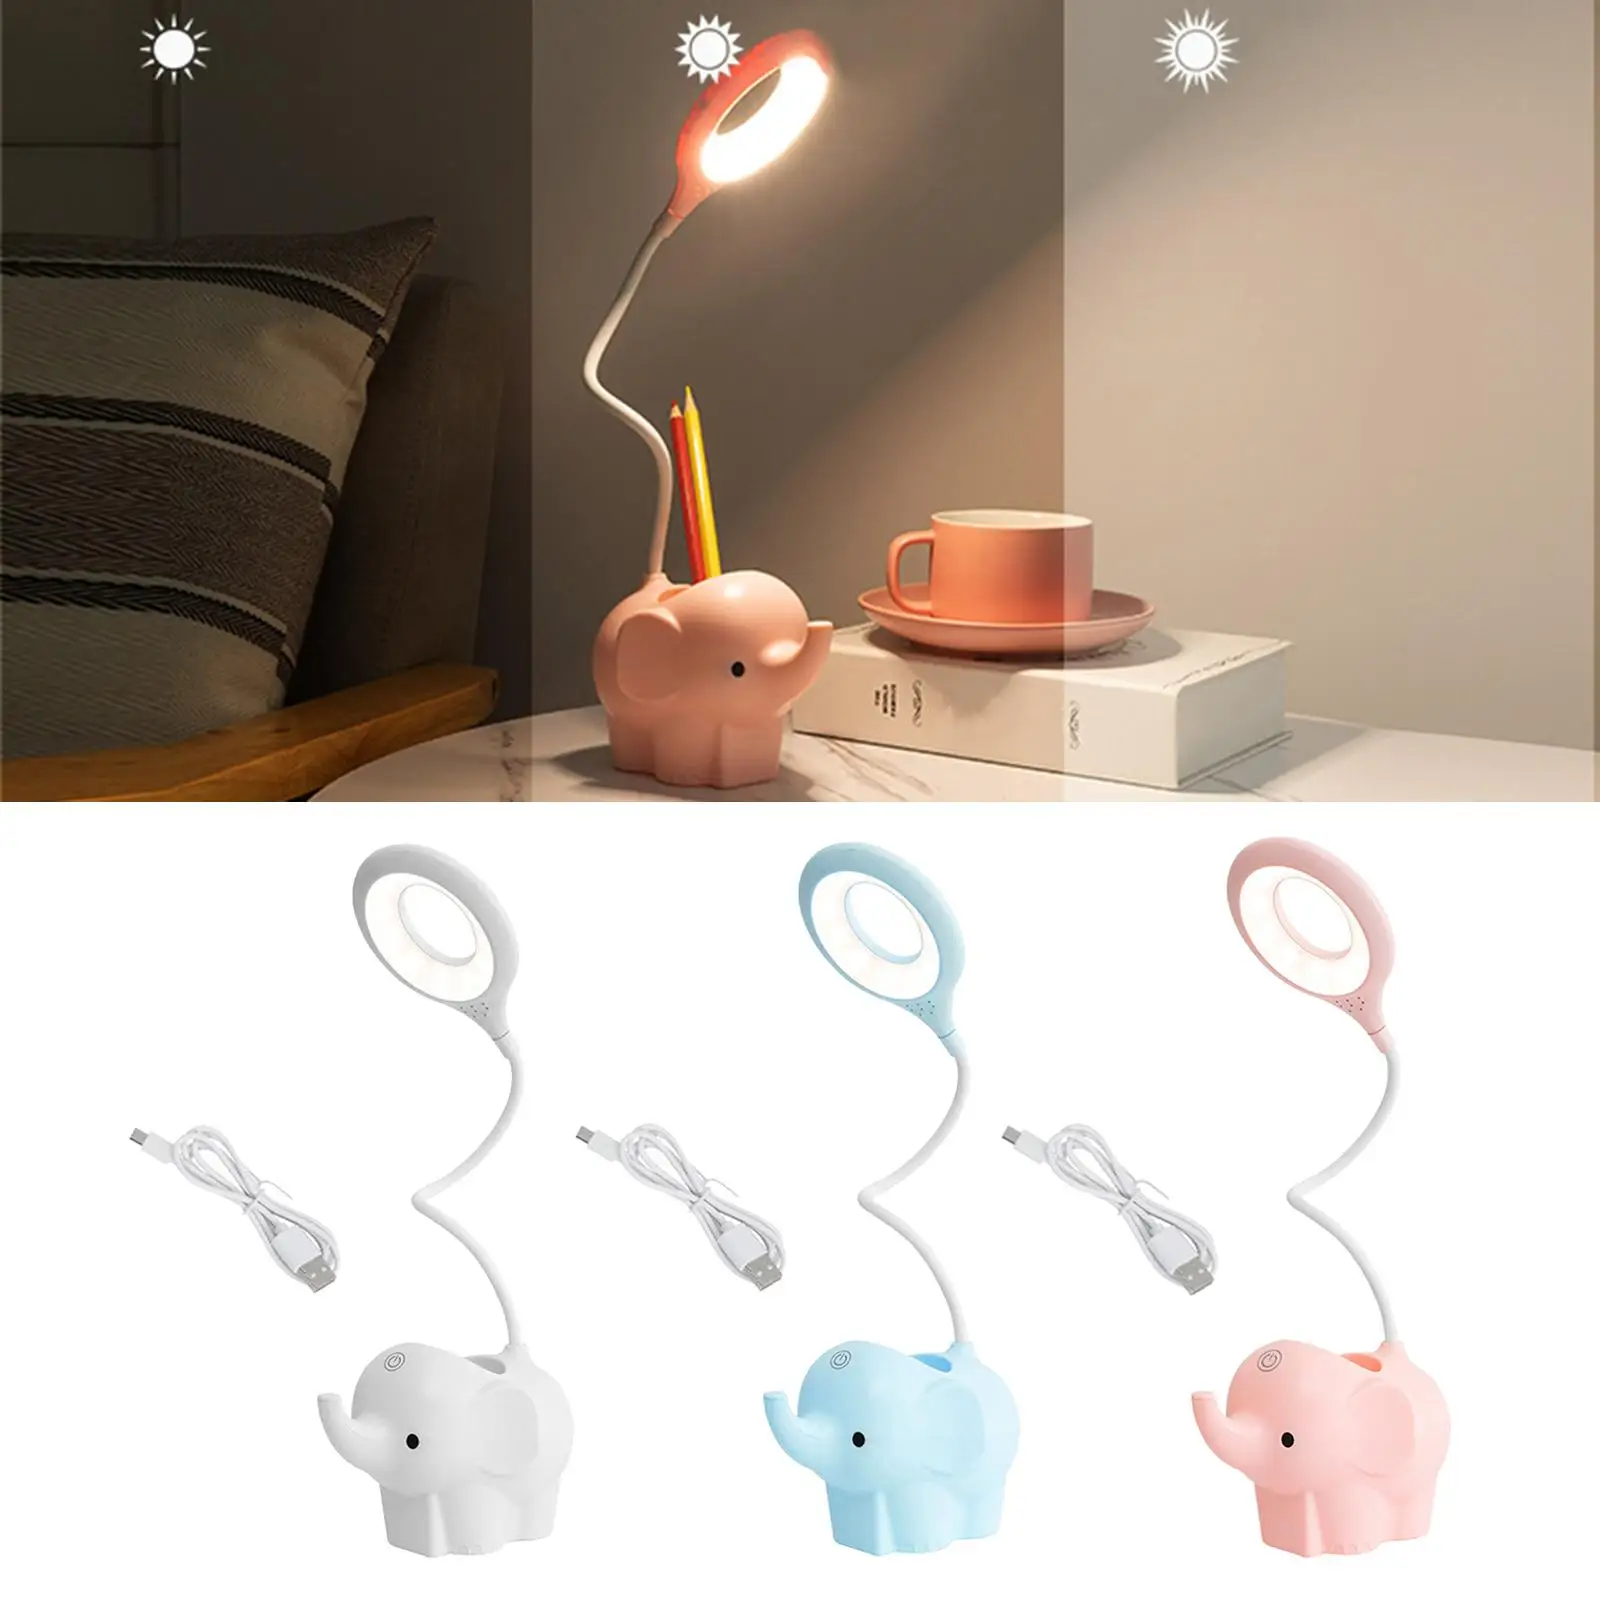 Elephant LED Table Desk Lamp Night Light 3 Stage Dimming w/Phone Holder